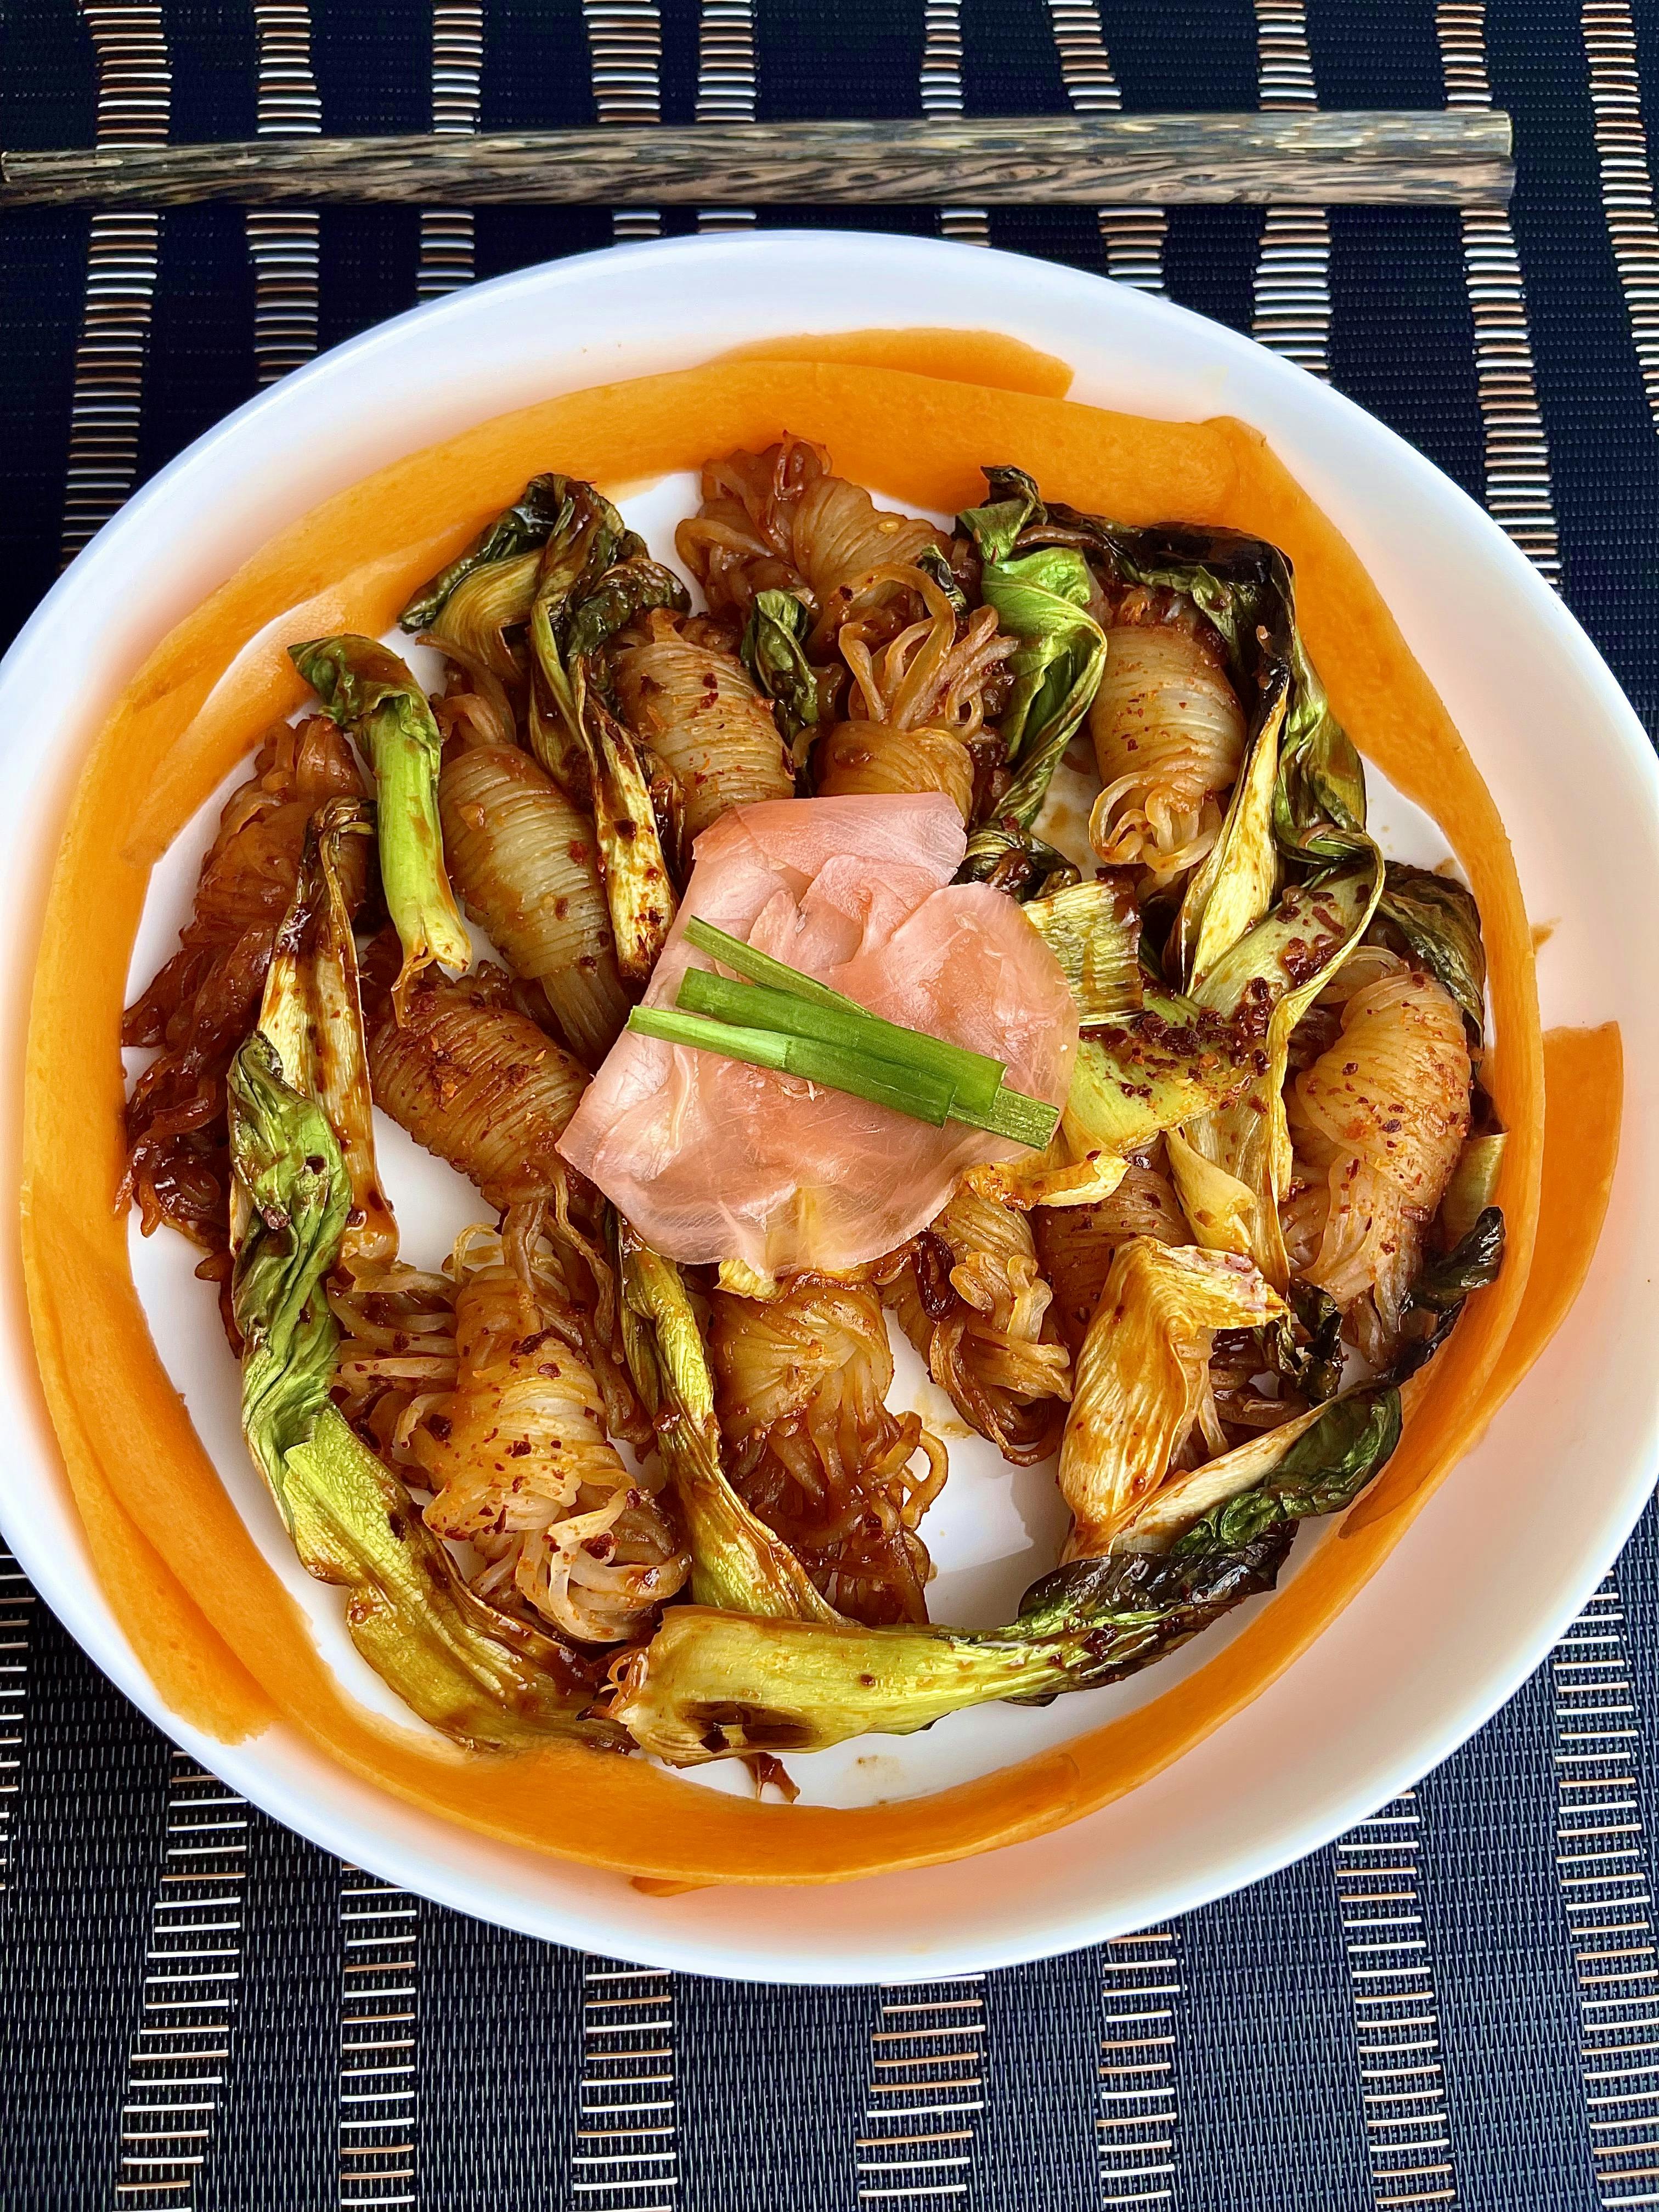 Picture for 96 calorie Korean style shirataki noodles 